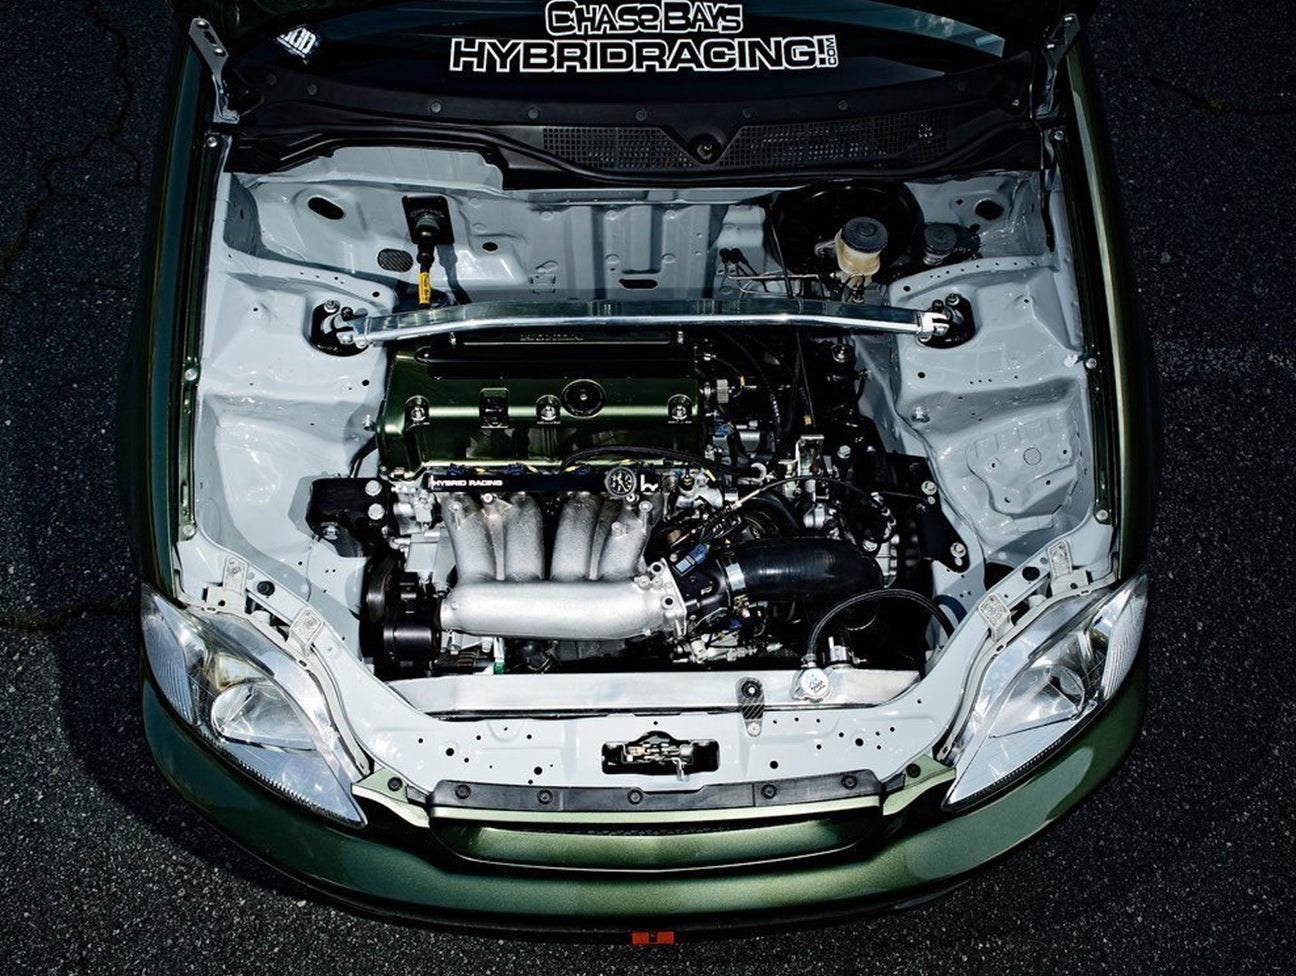 Fuel Line Tuck kit with Mini Filter - Honda Civic Acura Integra B